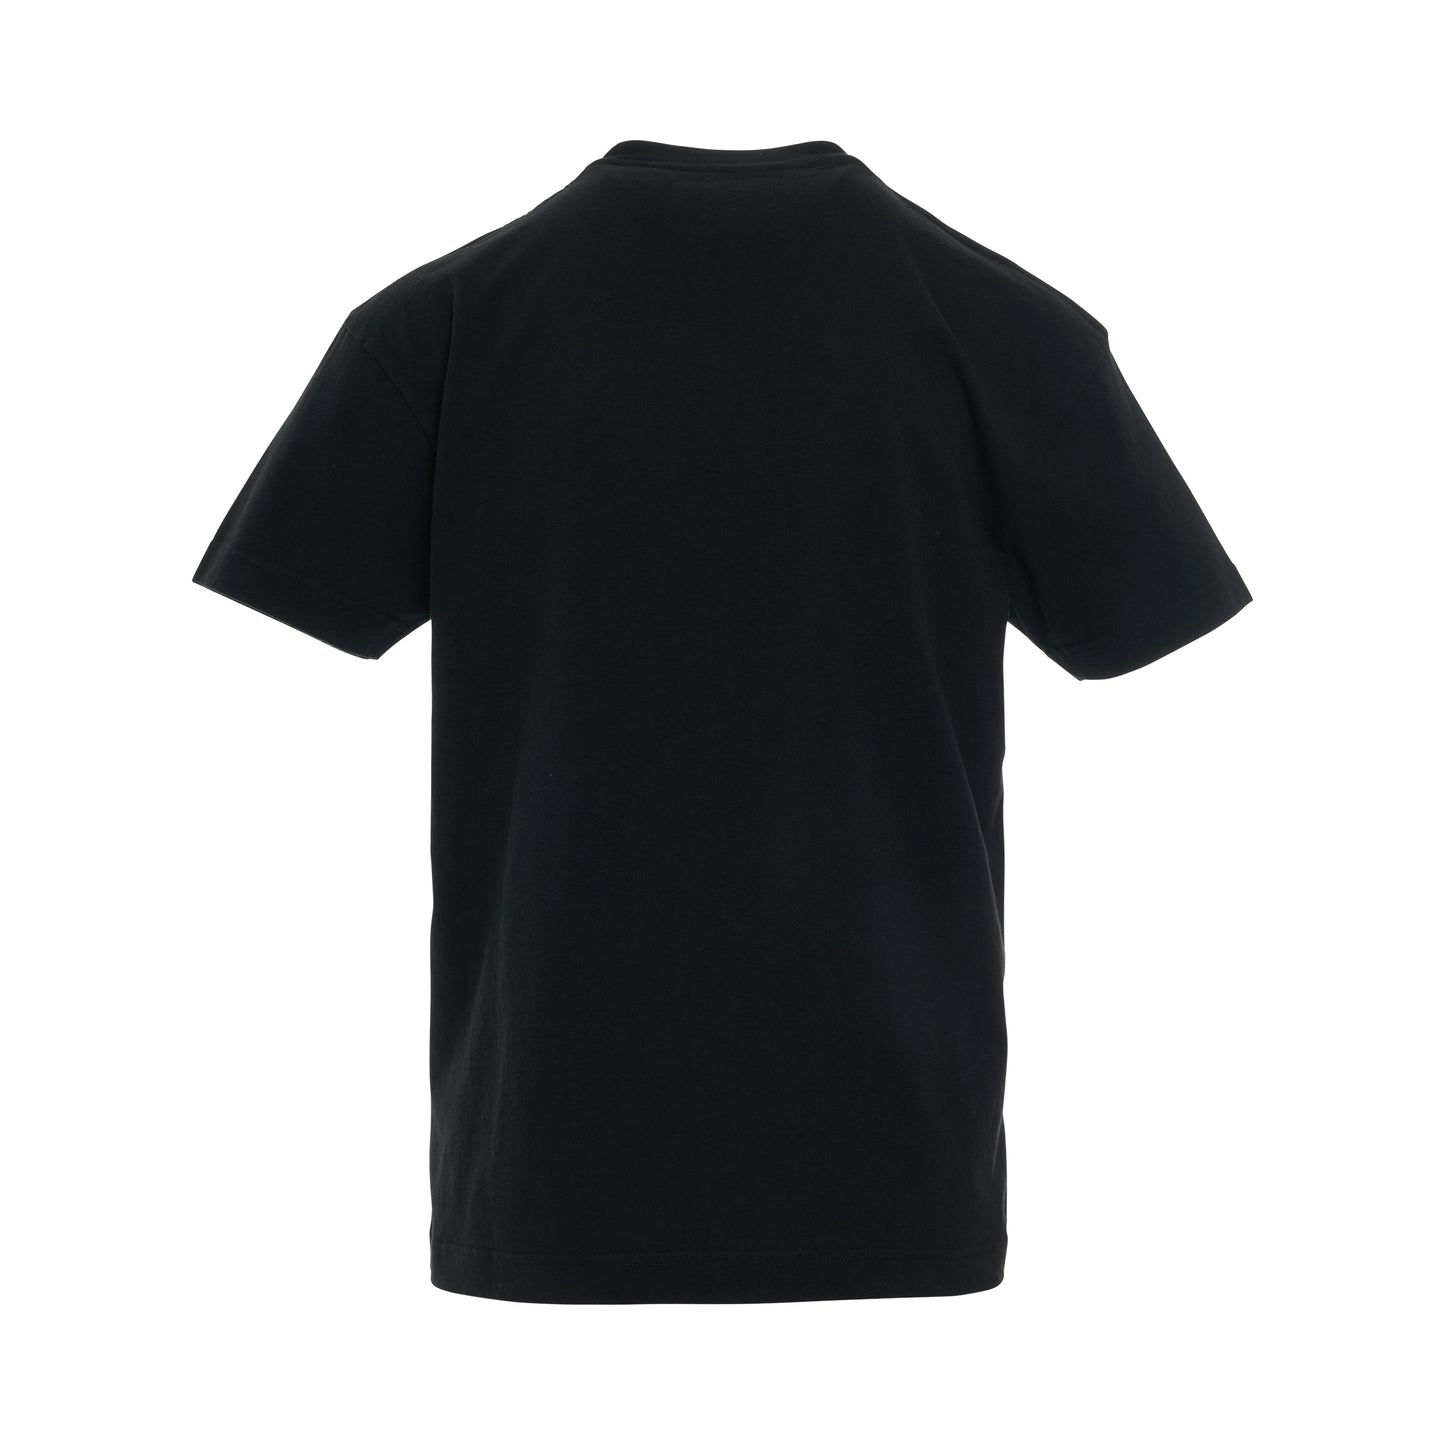 Dubai Heart Sprayed T-Shirt in Black